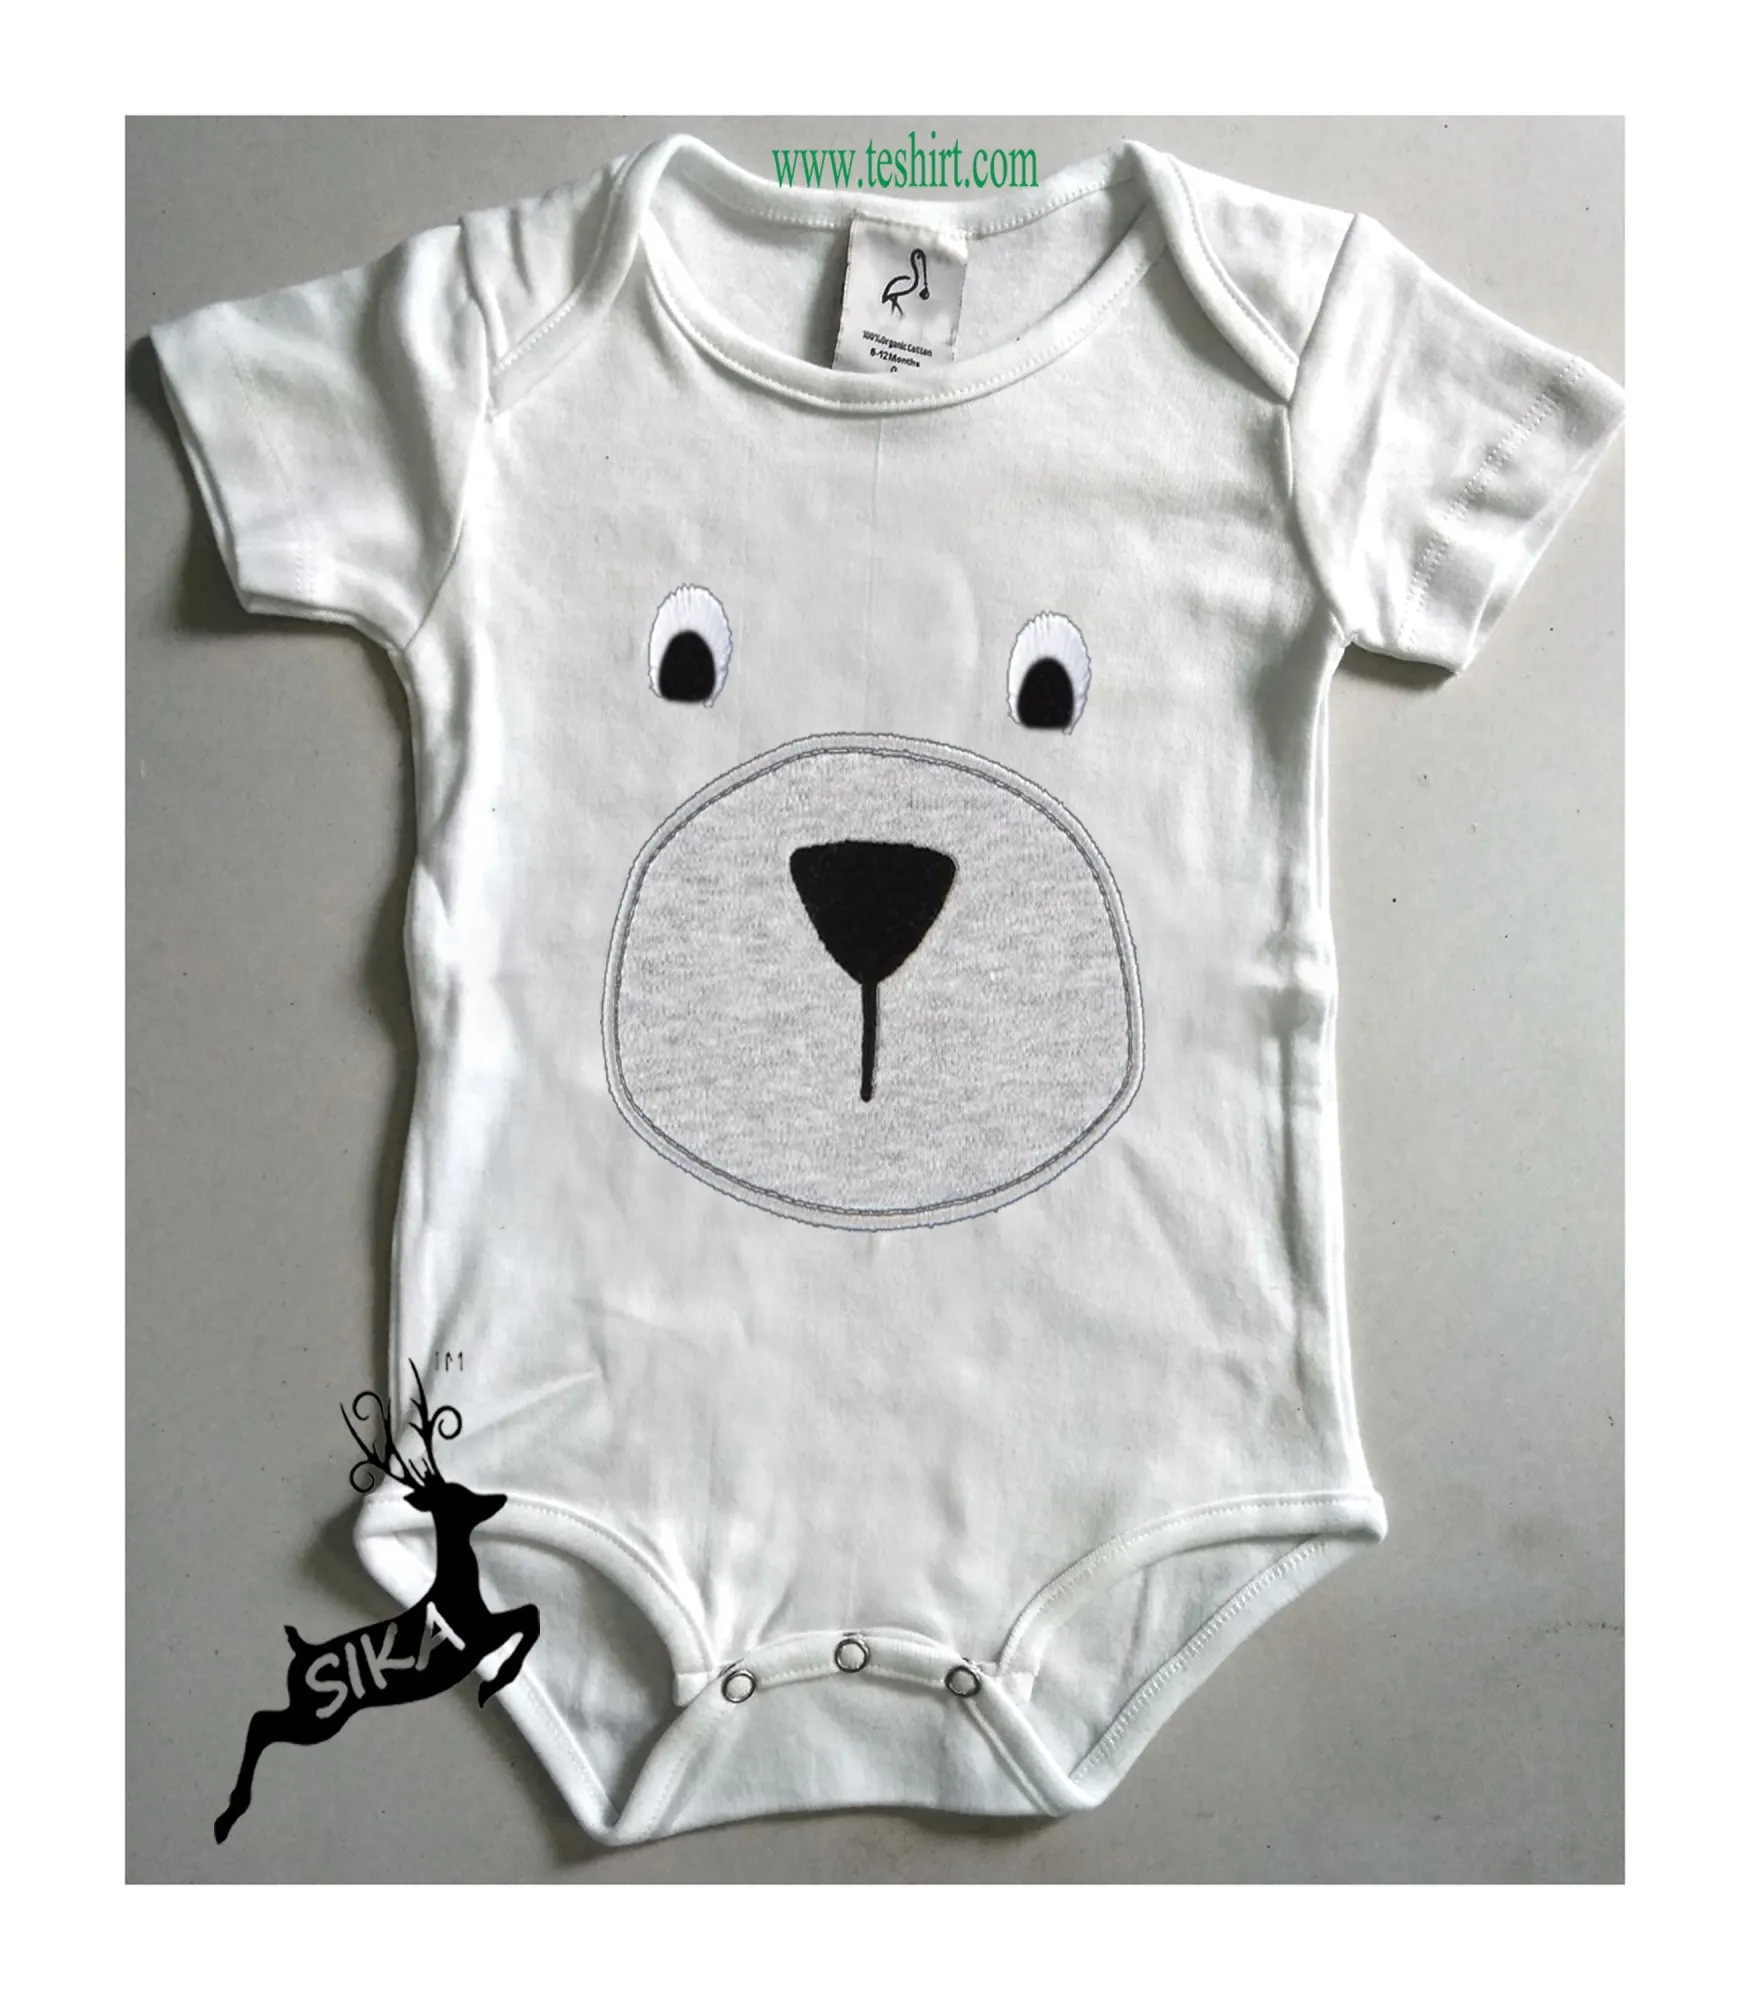 fashion baby clothes romper newborn eco friendly oeko tex standard white baby rompers for newborn boy girl summer clothing